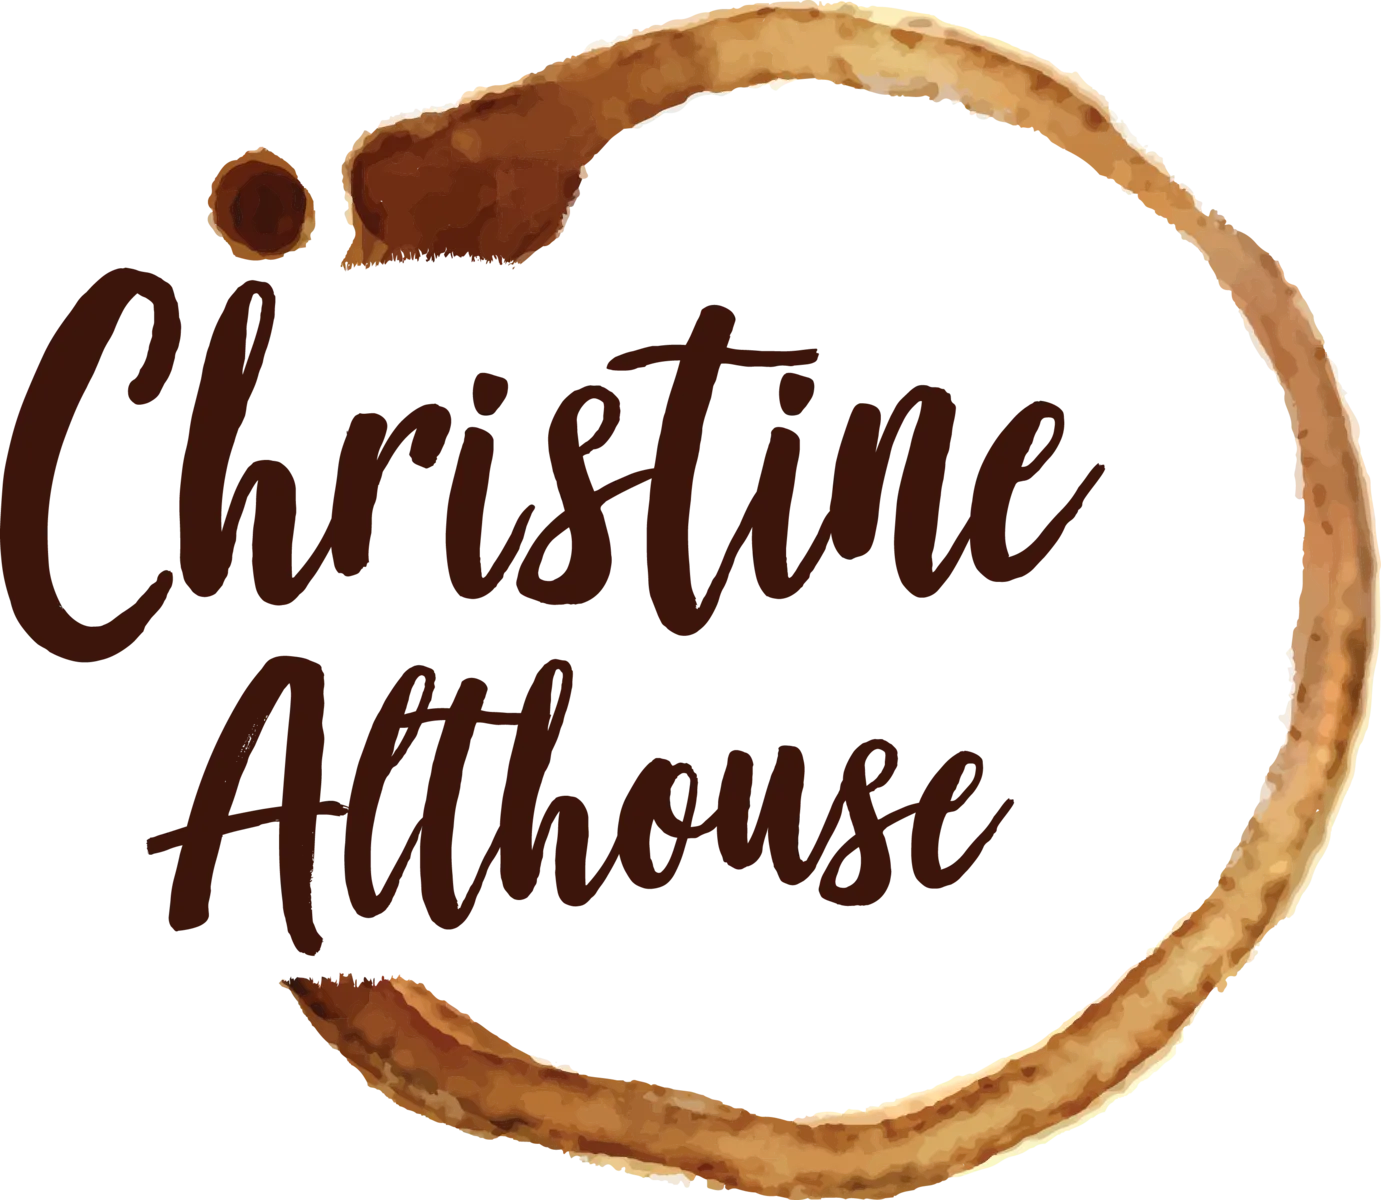 Christine Althouse